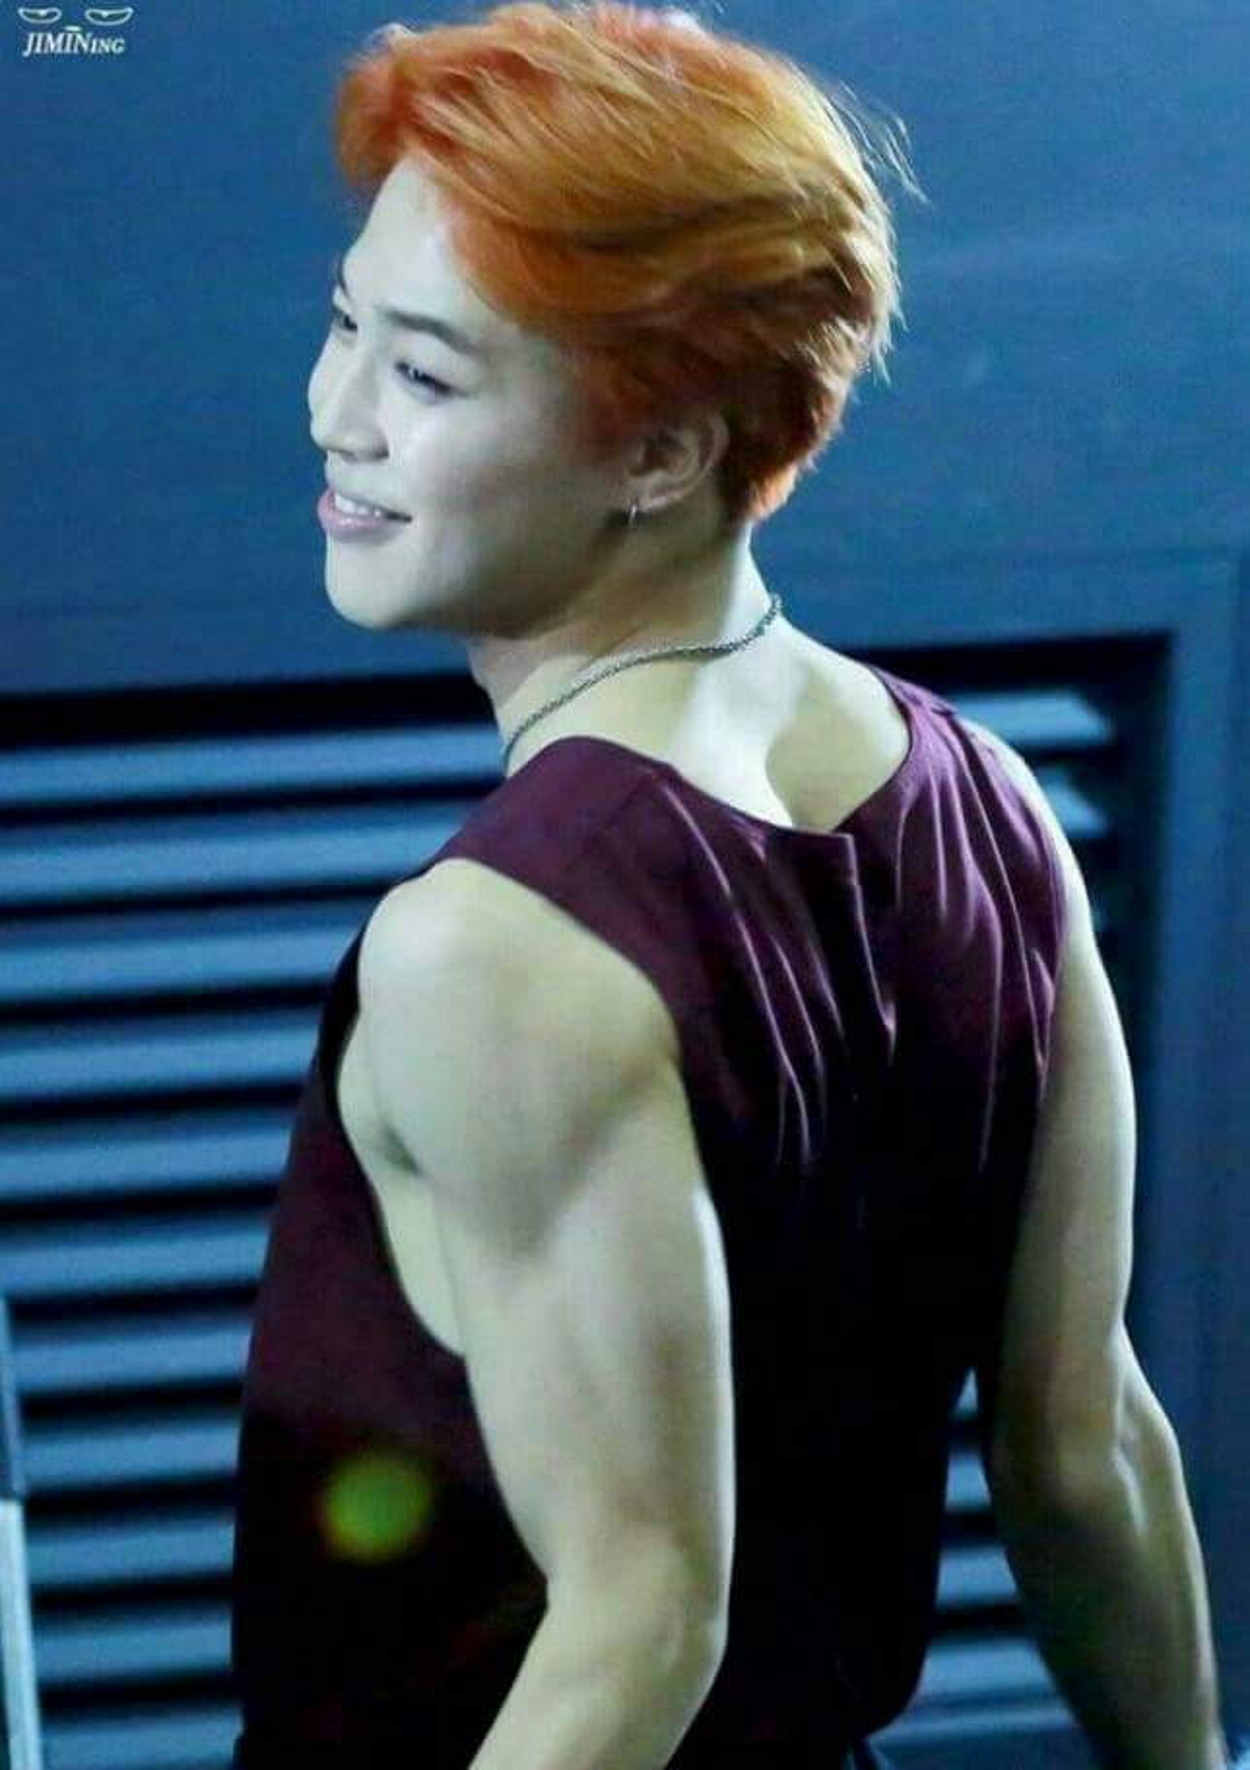 jimin orange hair muscles